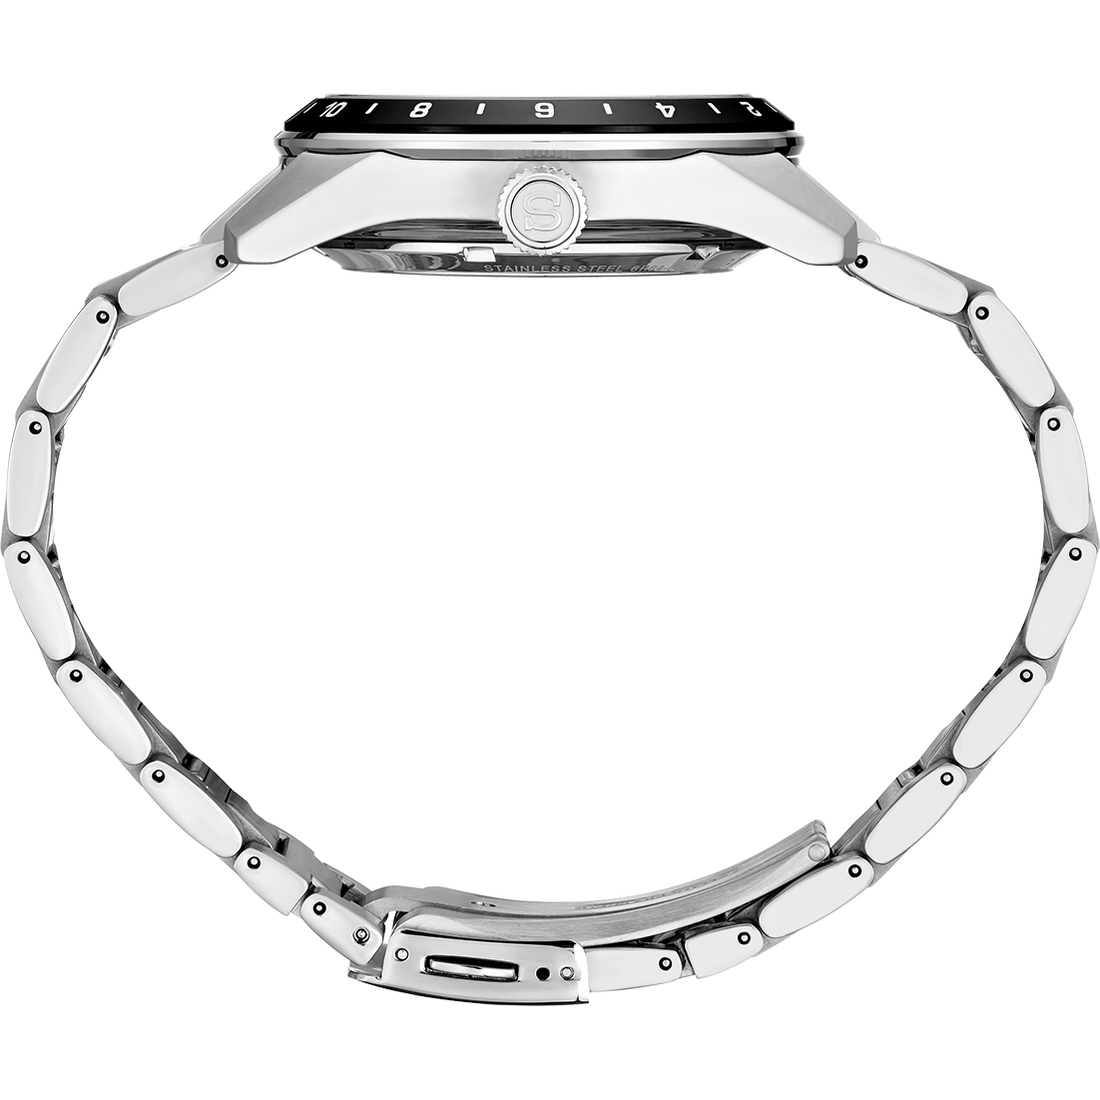 Seiko Presage SPB219 GMT 42.2mm Green Dial Watch